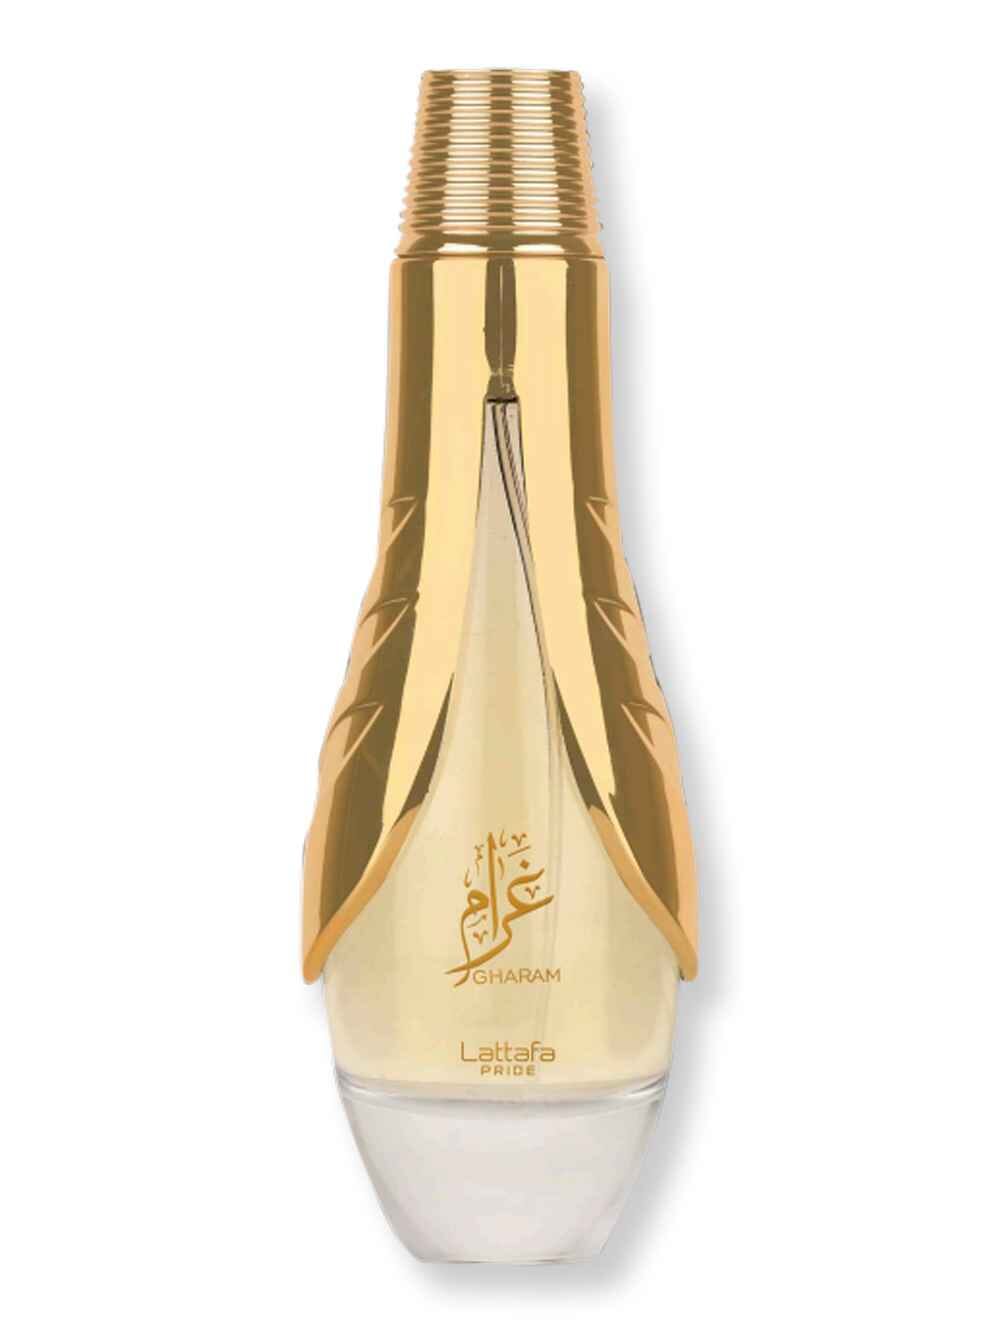 Lattafa Lattafa Pride Gharam EDP Spray 100 ml Perfume 